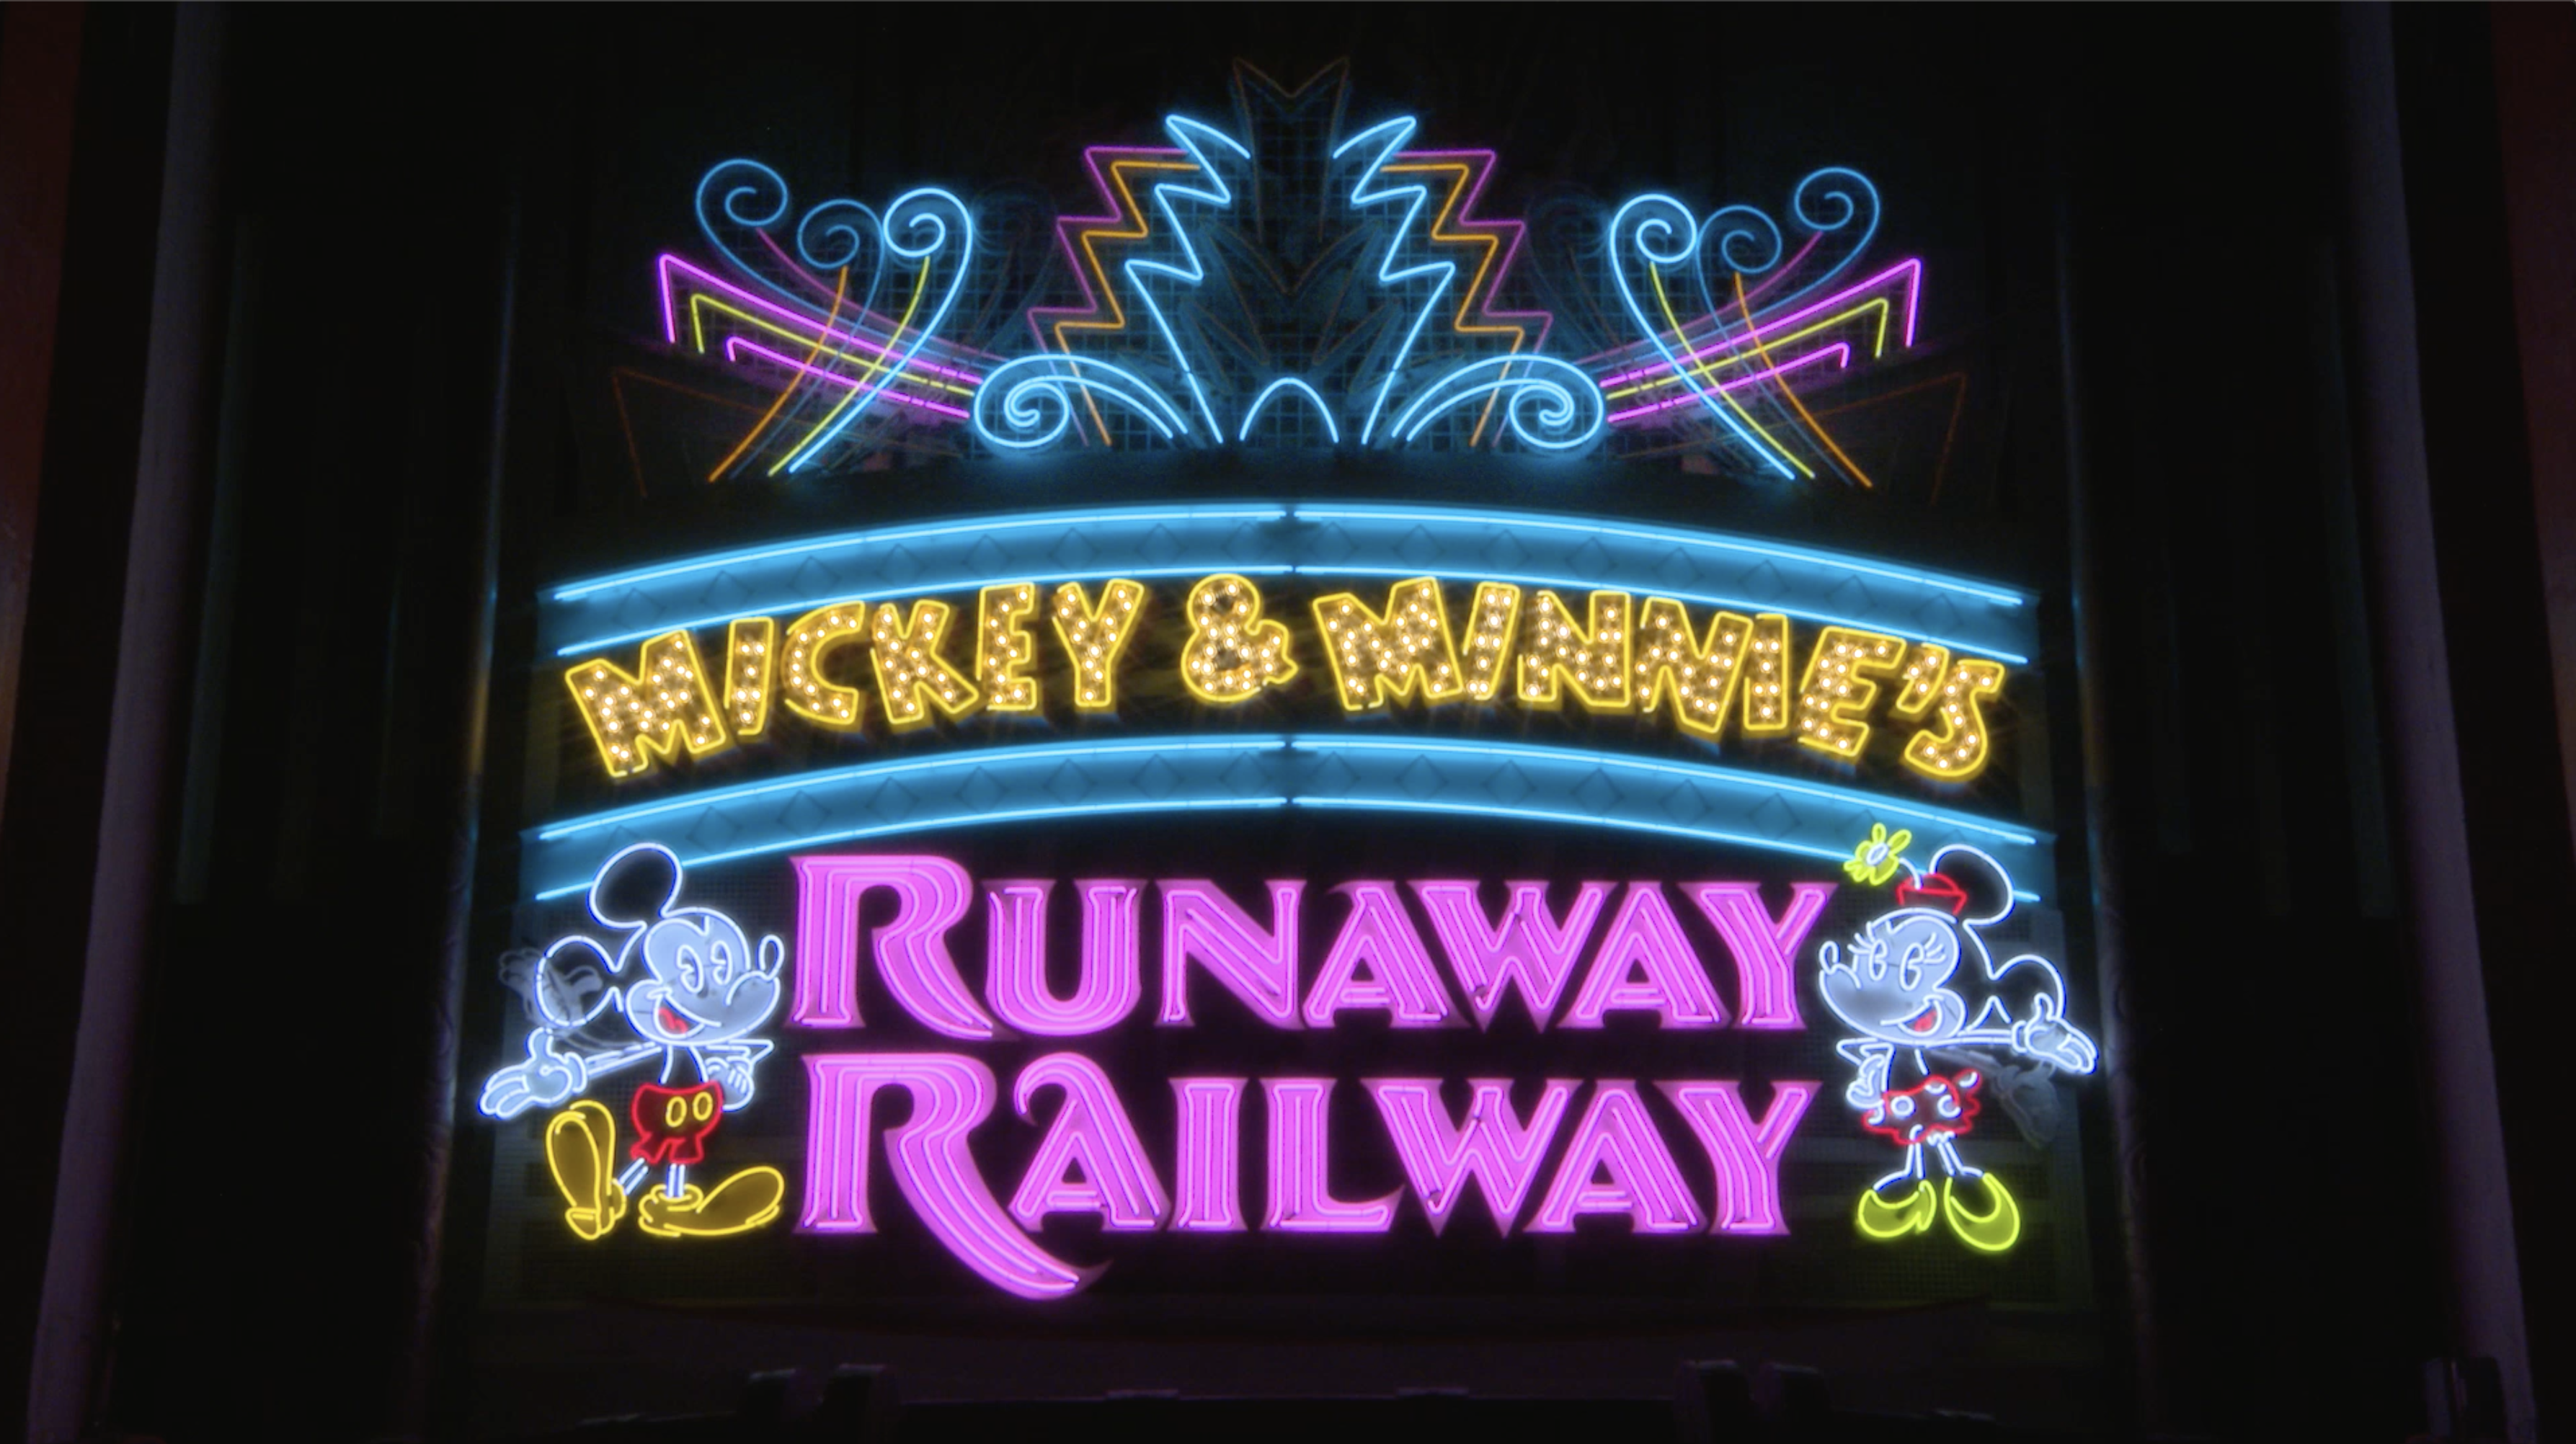 Disney World Cast Members will get to ride Mickey & Minnie Runaway Railway first